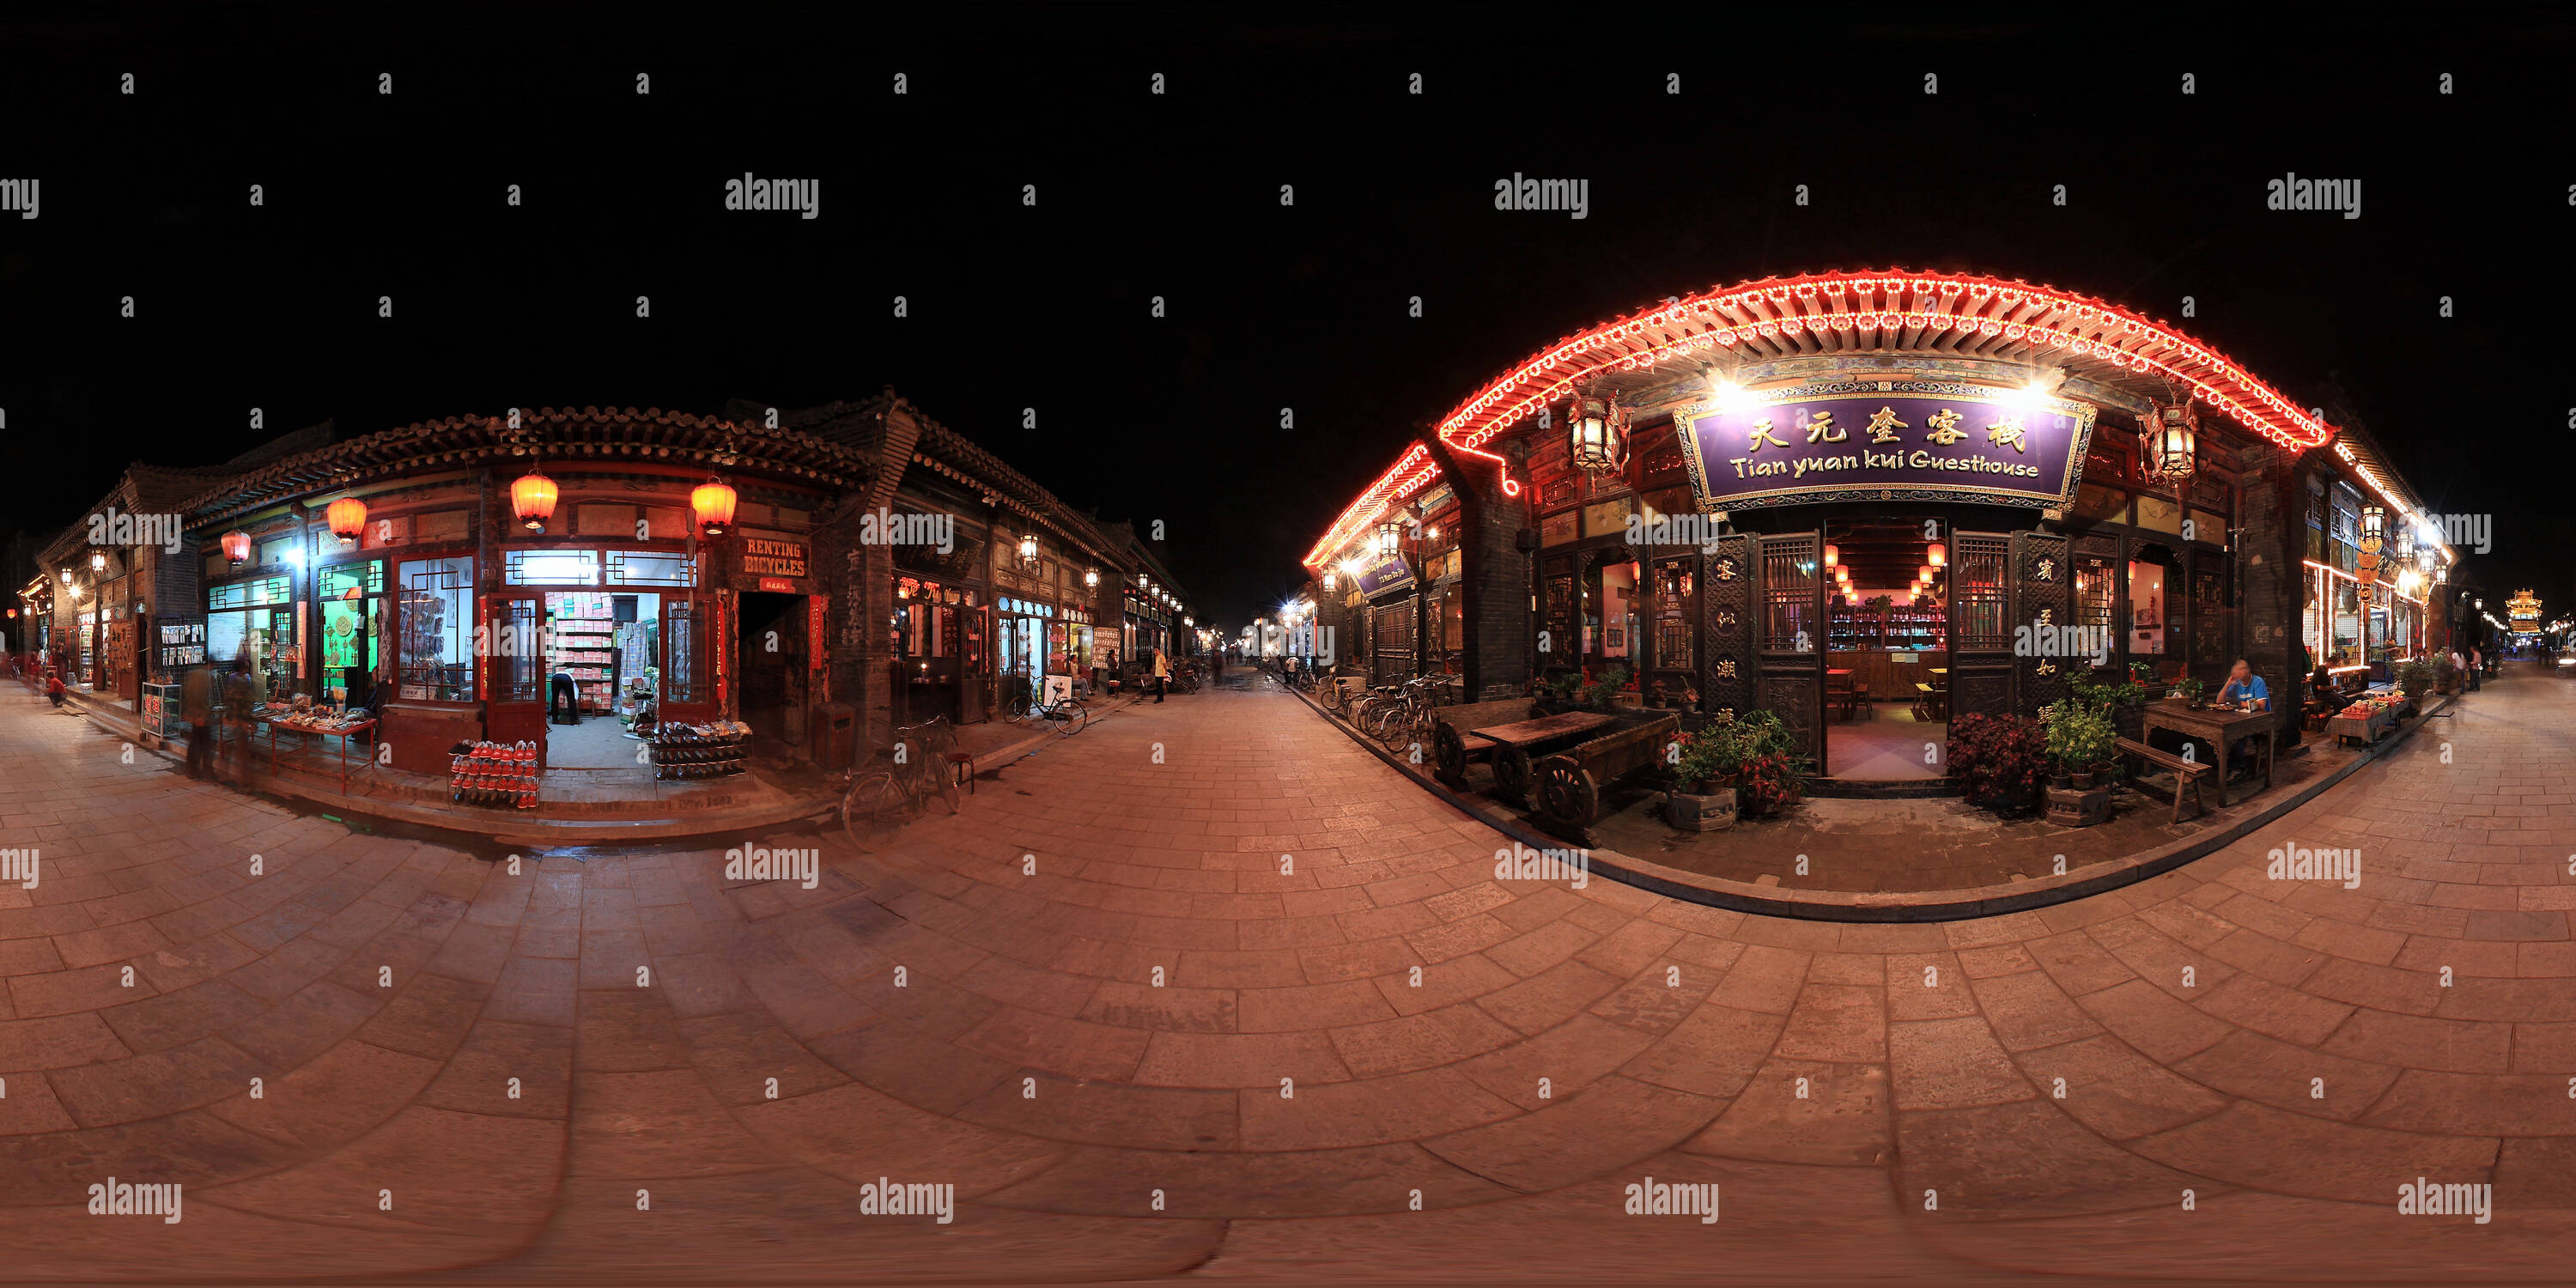 360 degree panoramic view of Pingyao Ancient City - Days Inn Corey Yuen (night)